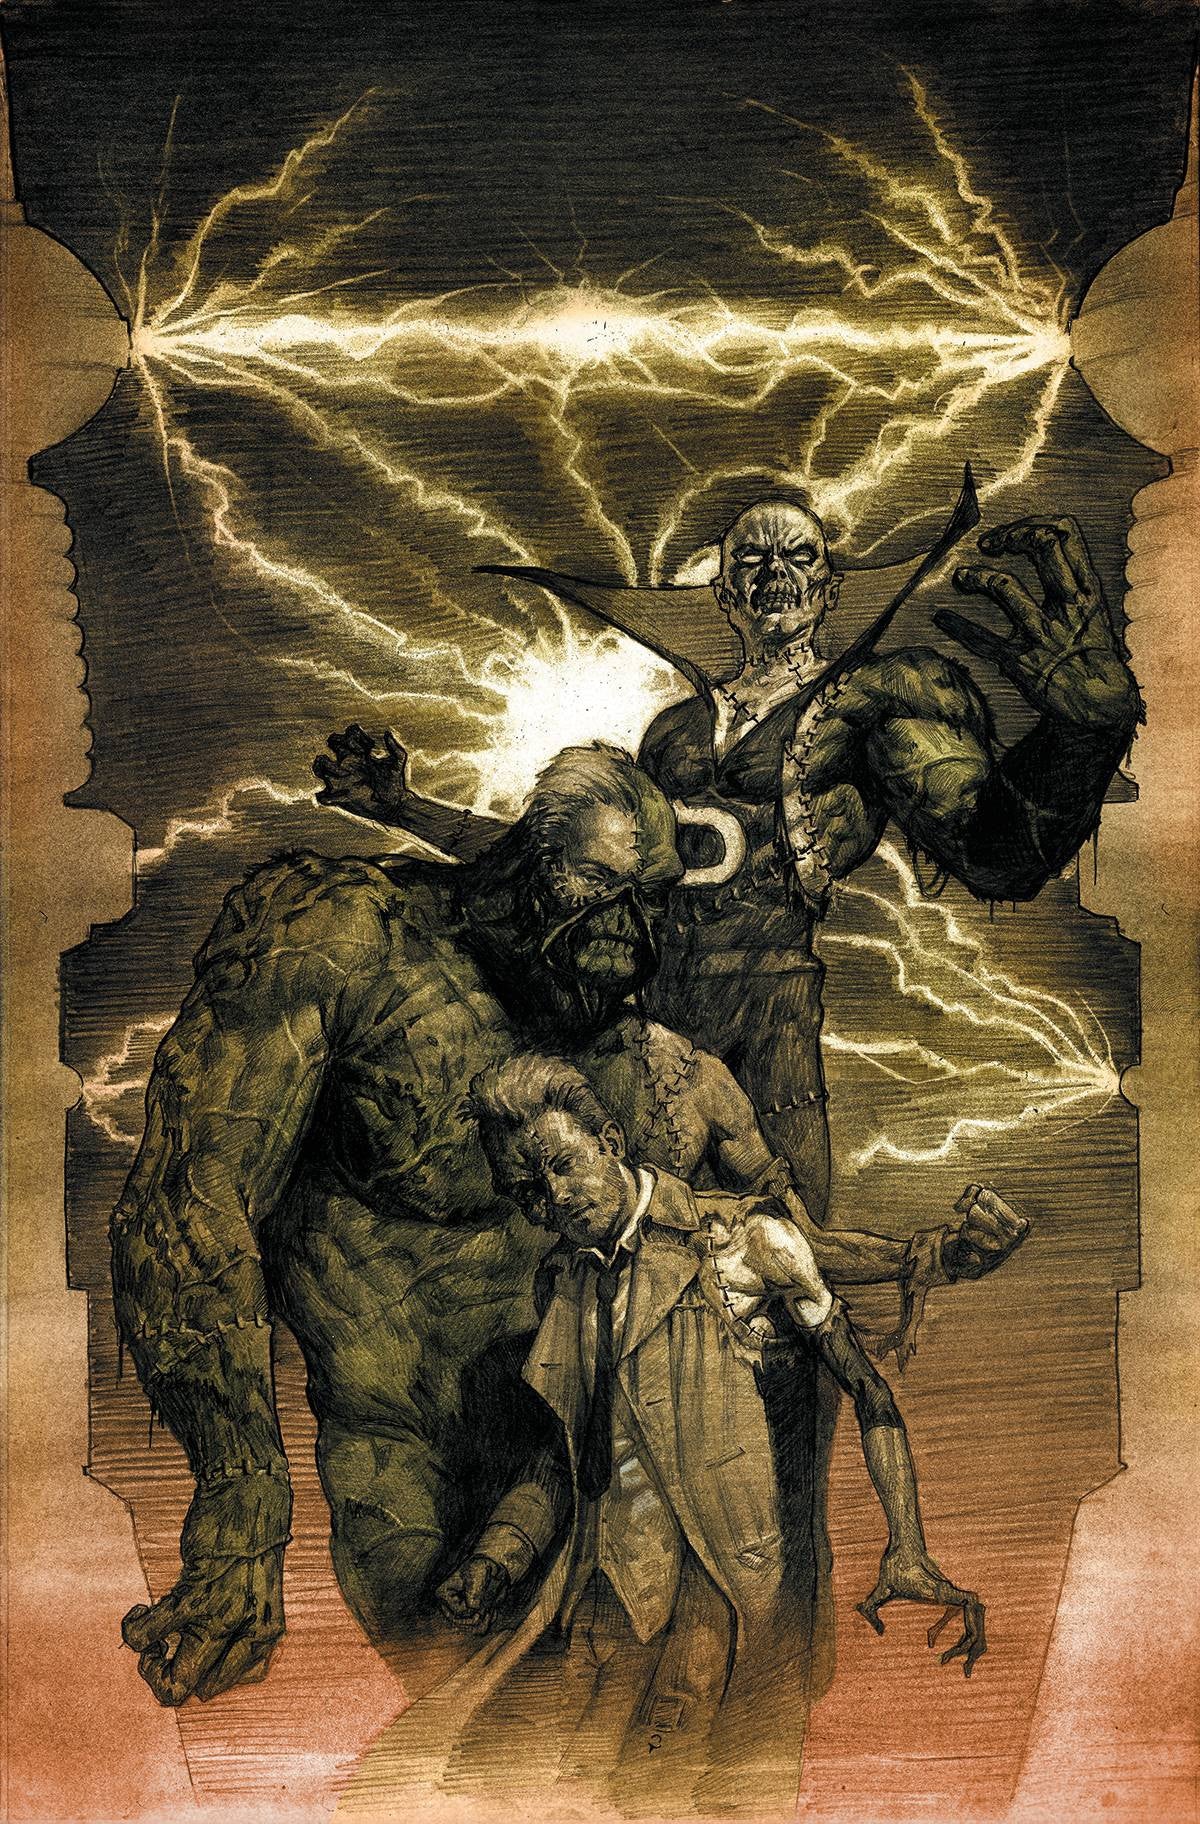 Justice League Dark (2011) #35 "Monsters" Variant